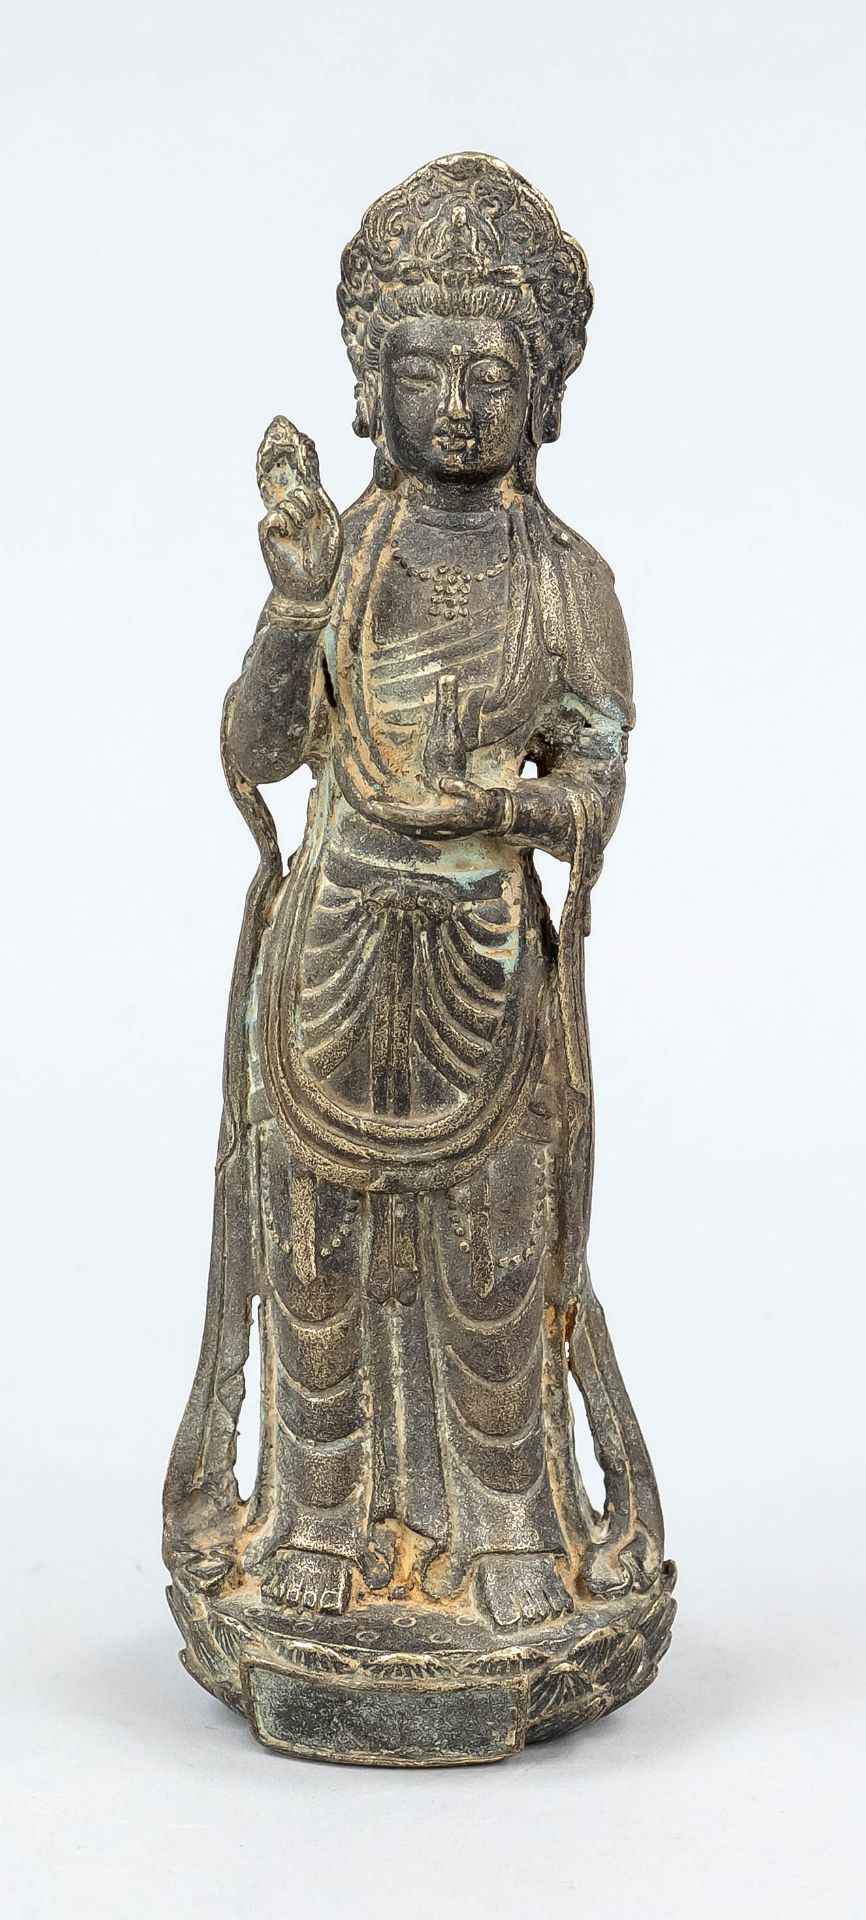 Willow Branch Guanyin, China, Republic period(1912-1949), bronze patinated, Bodhisattva